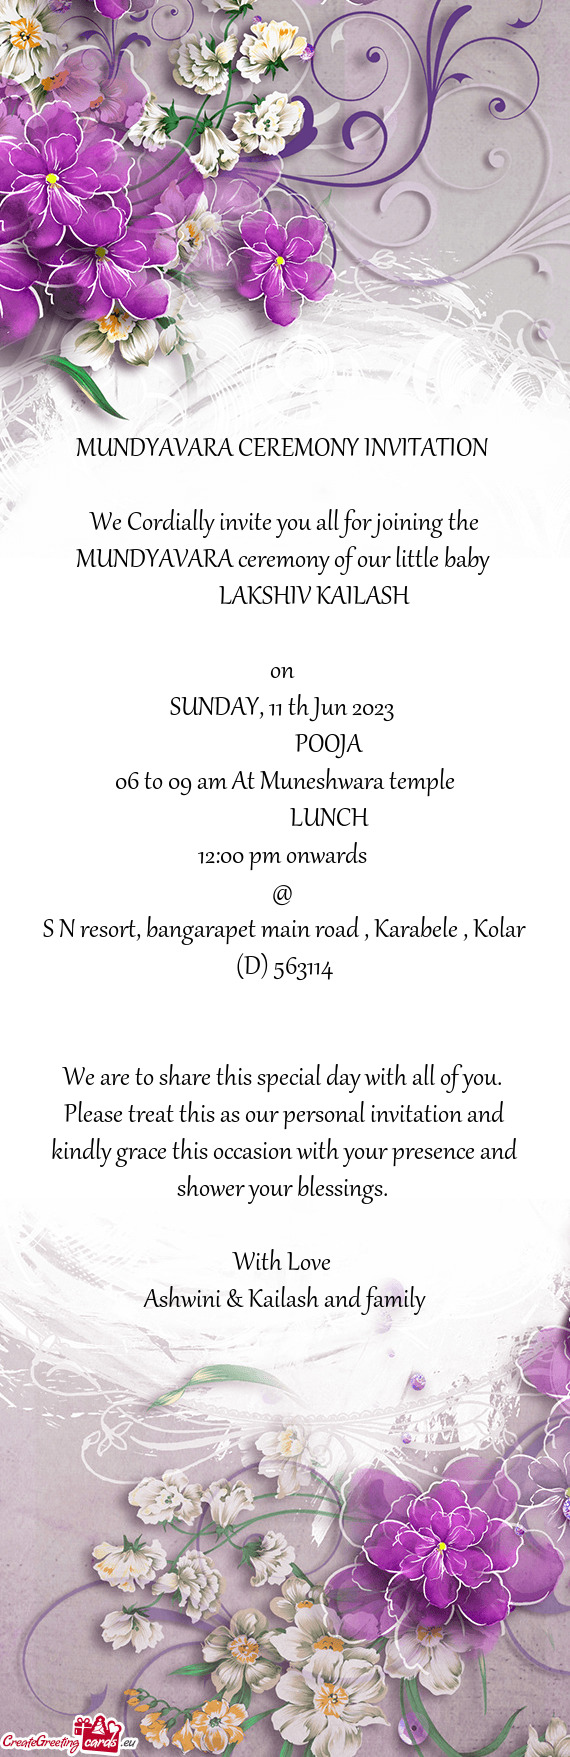 06 to 09 am At Muneshwara temple